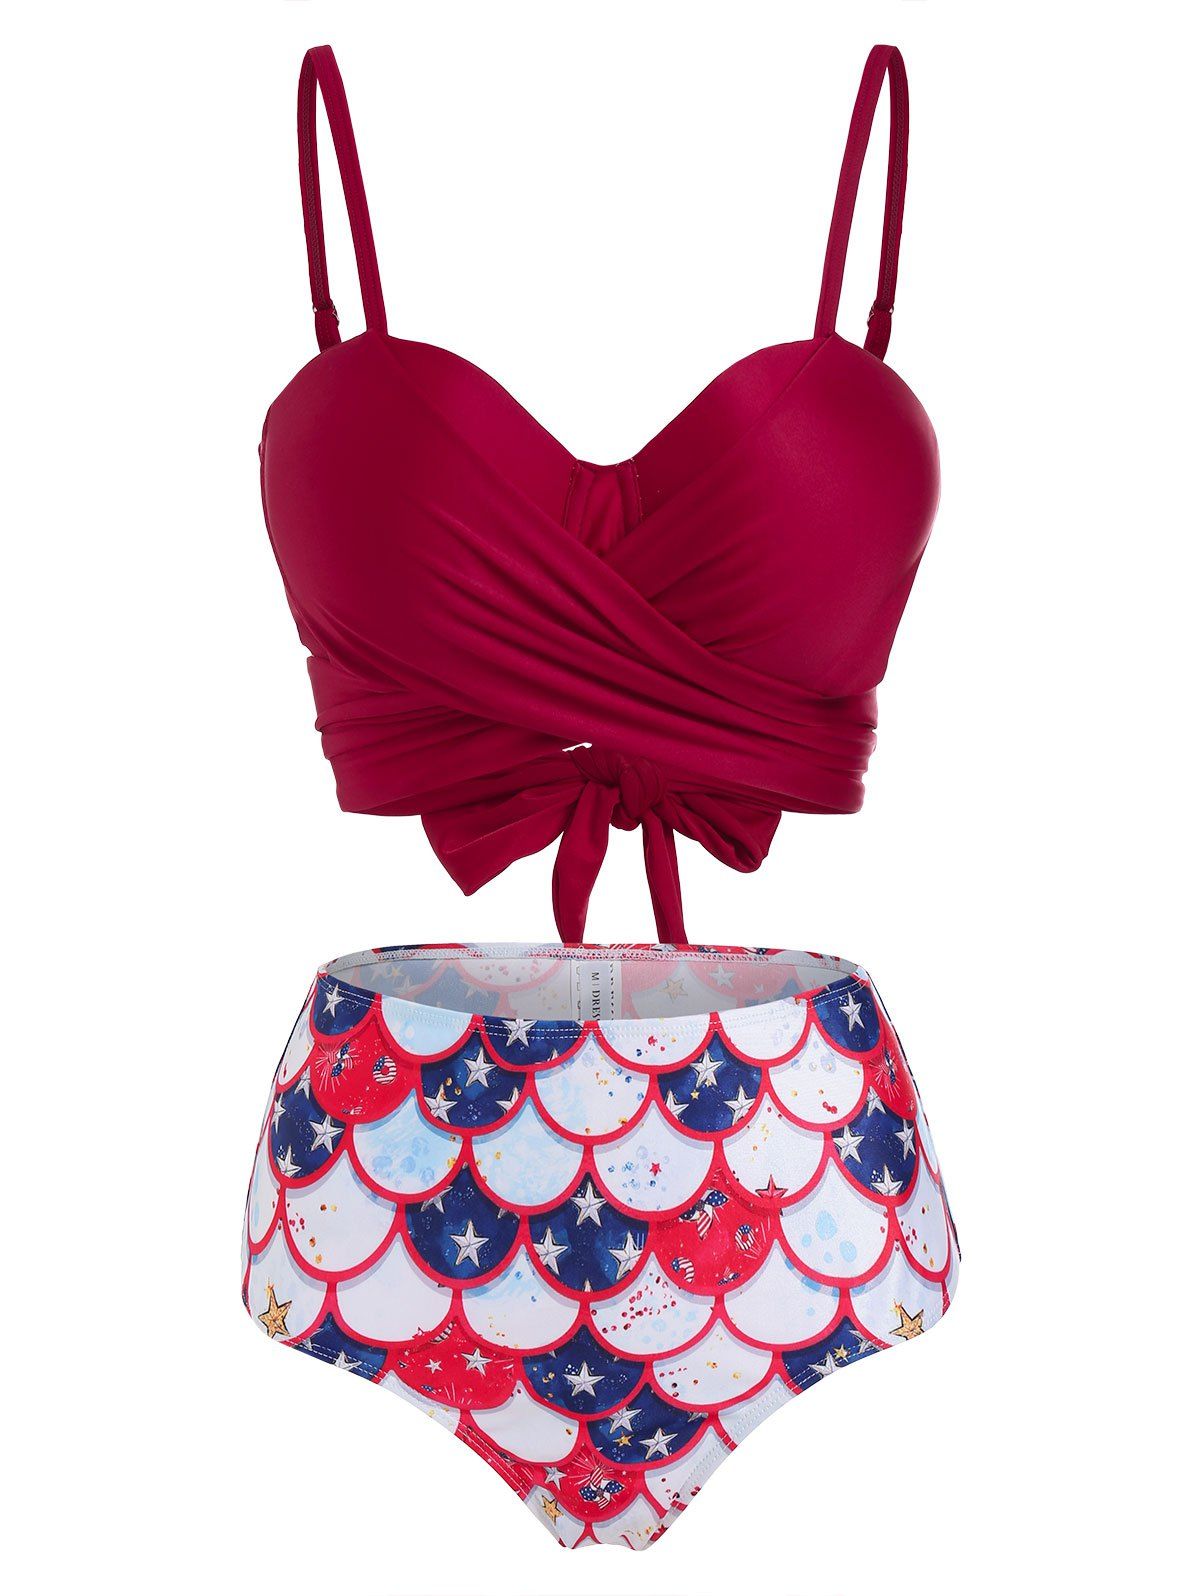 Mermaid Star Print Swimsuit Tummy Control Bikini Swimwear Padded Wrap Tied Back Beach Bathing Suit - DEEP RED XXXL